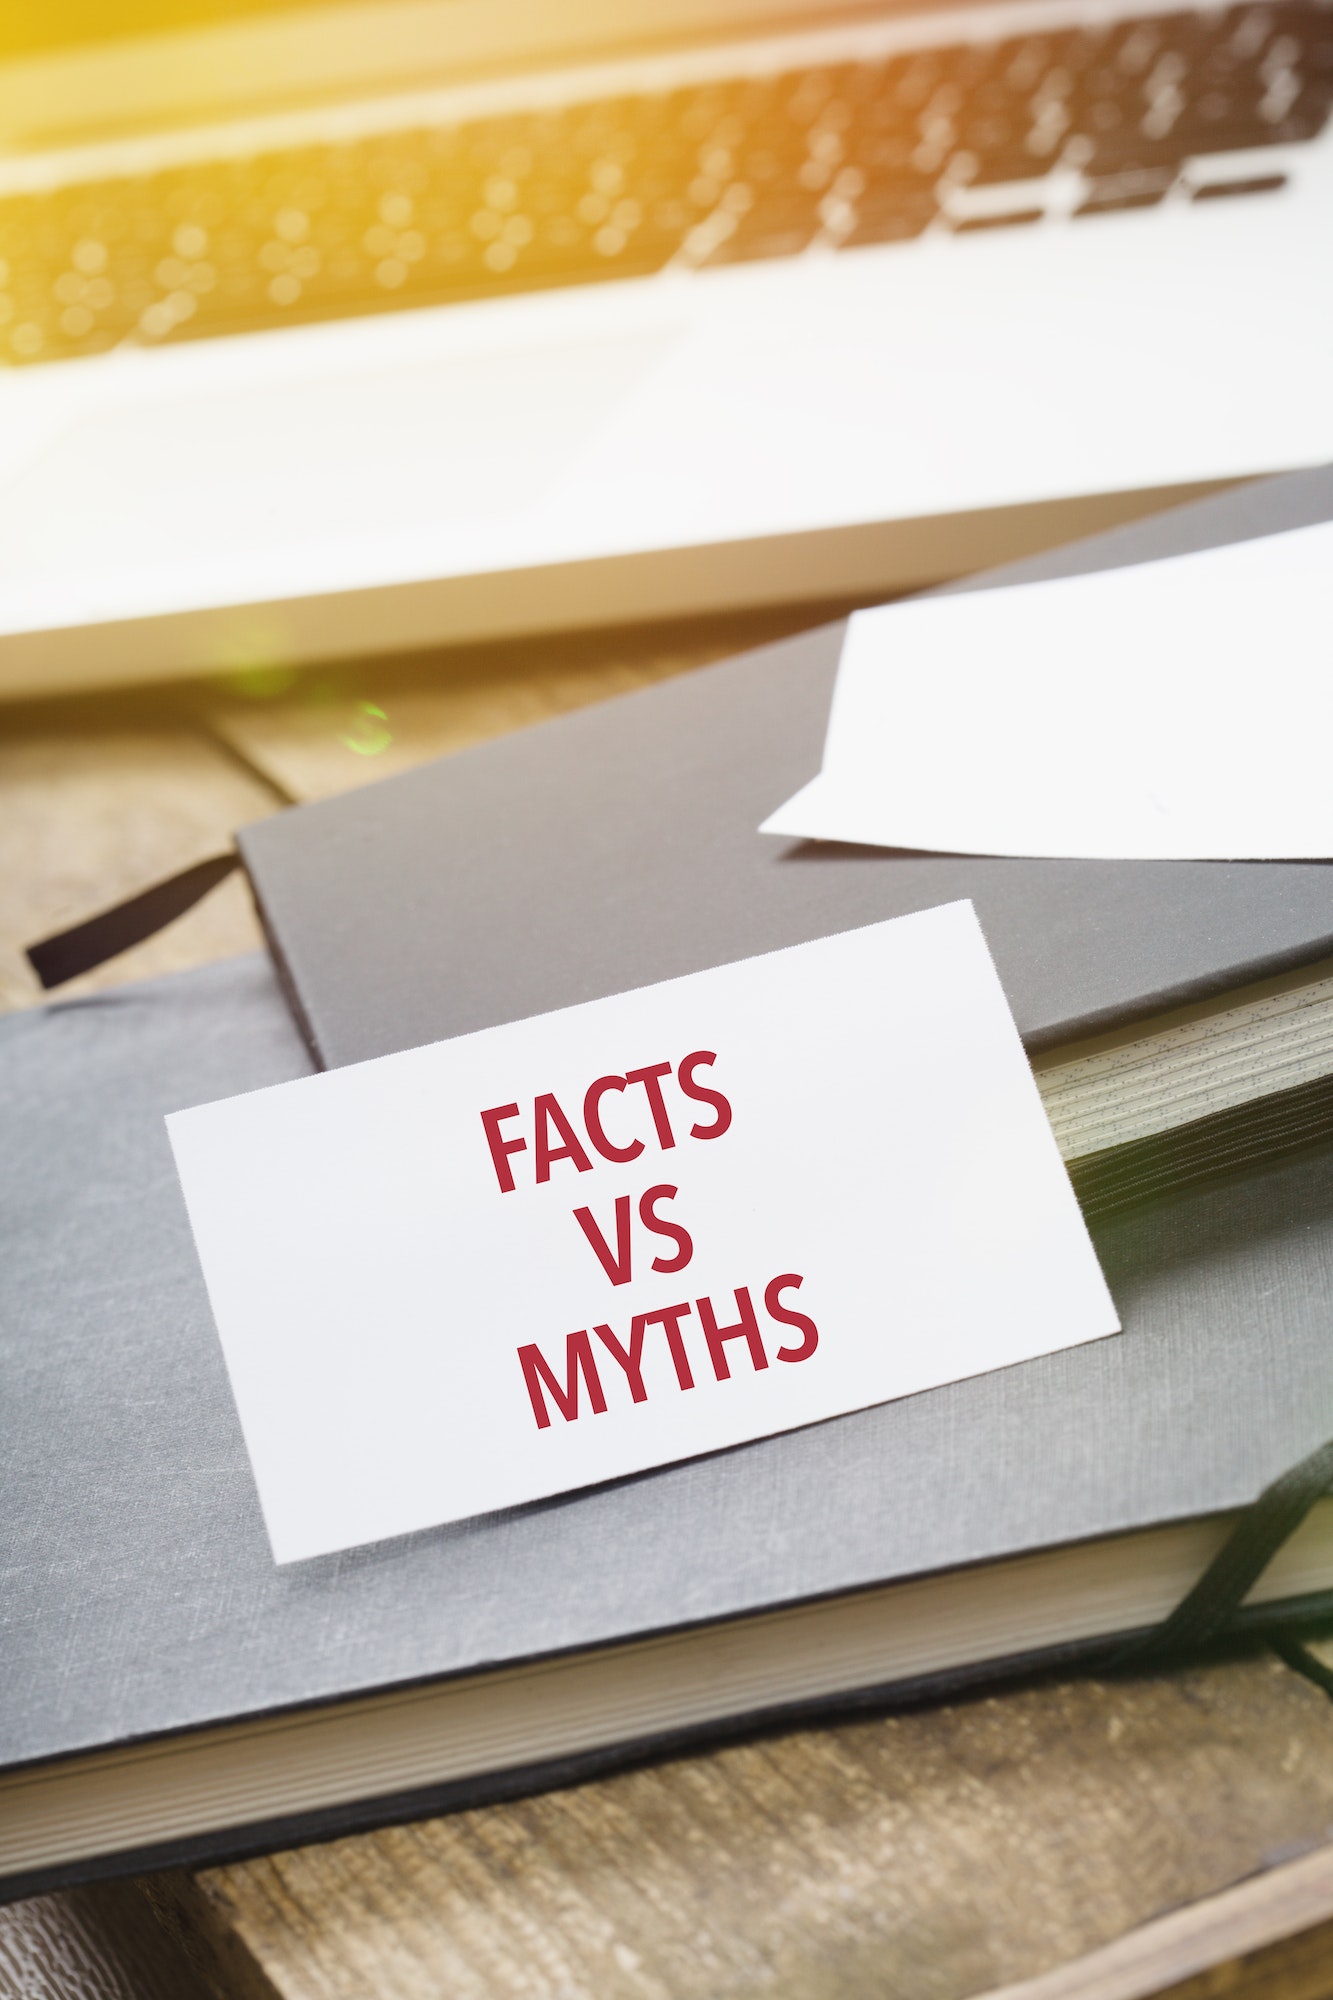 facts vs myths on card at office desktop